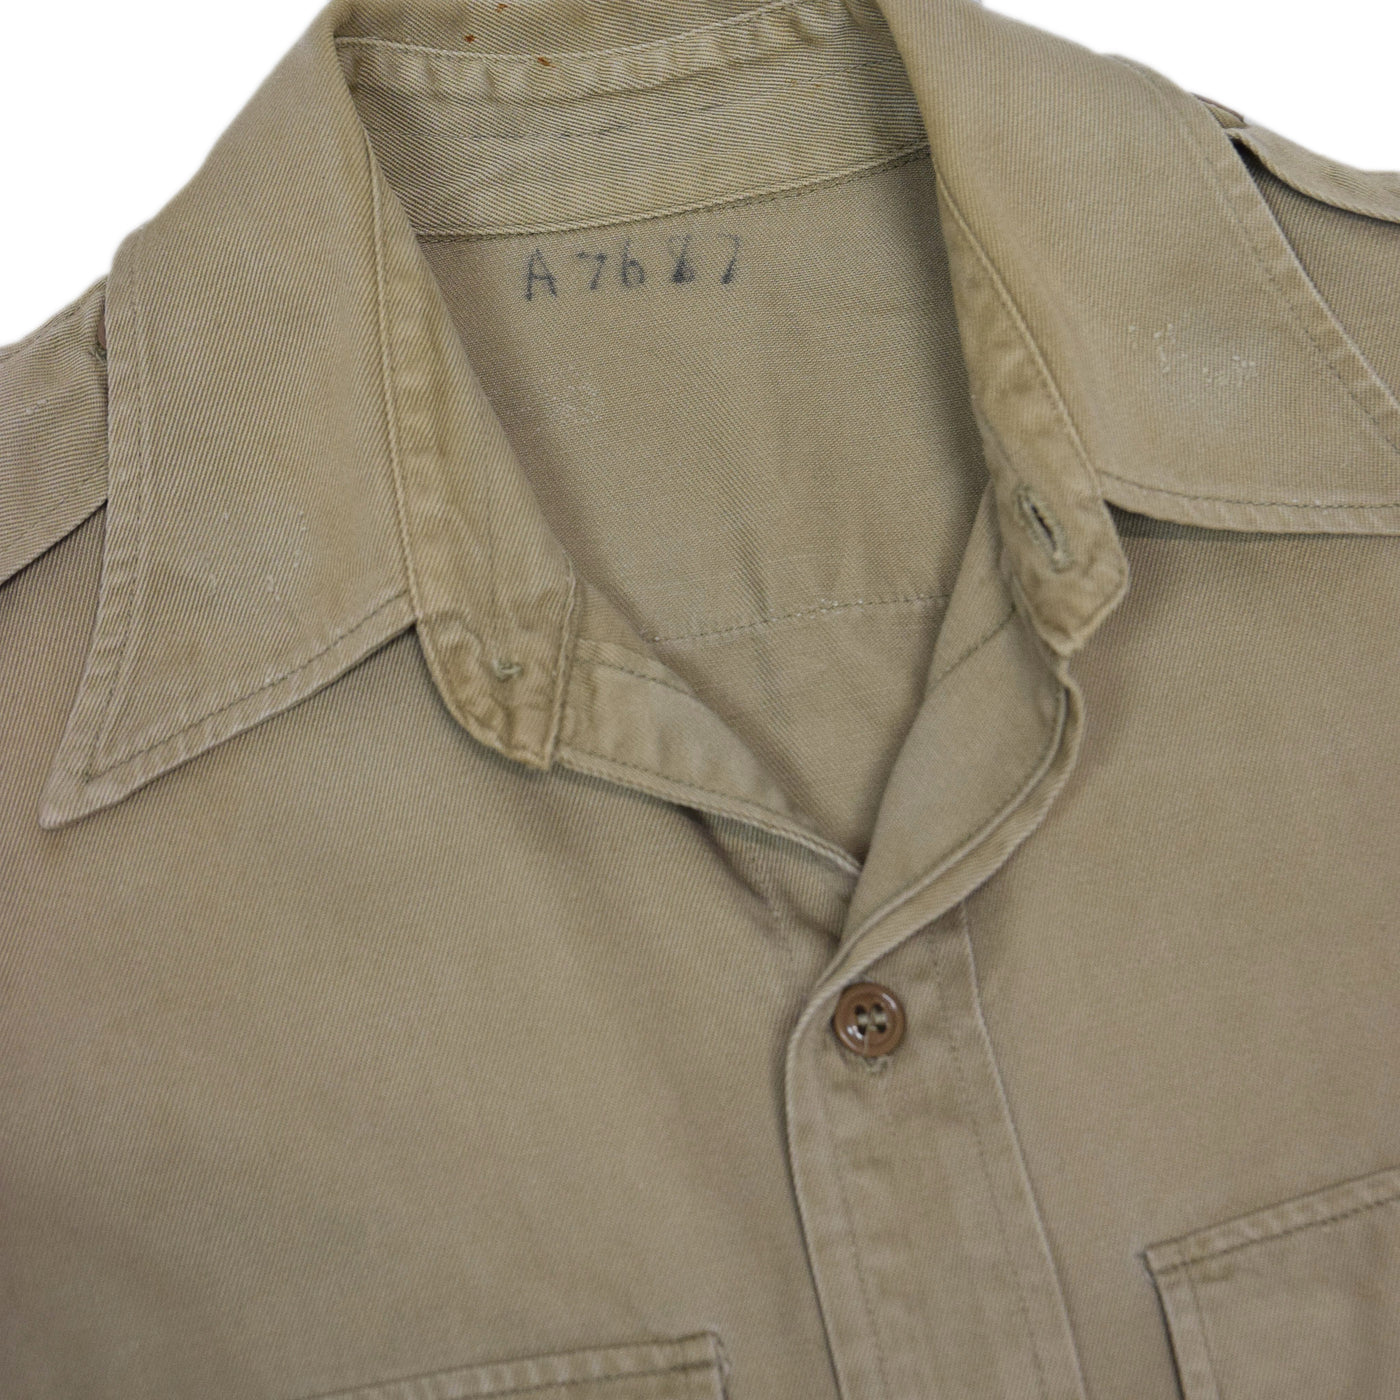 Vintage 40s US Army Khaki Cotton Twill Military Field Shirt S / XS- BACK NECK DETAIL 